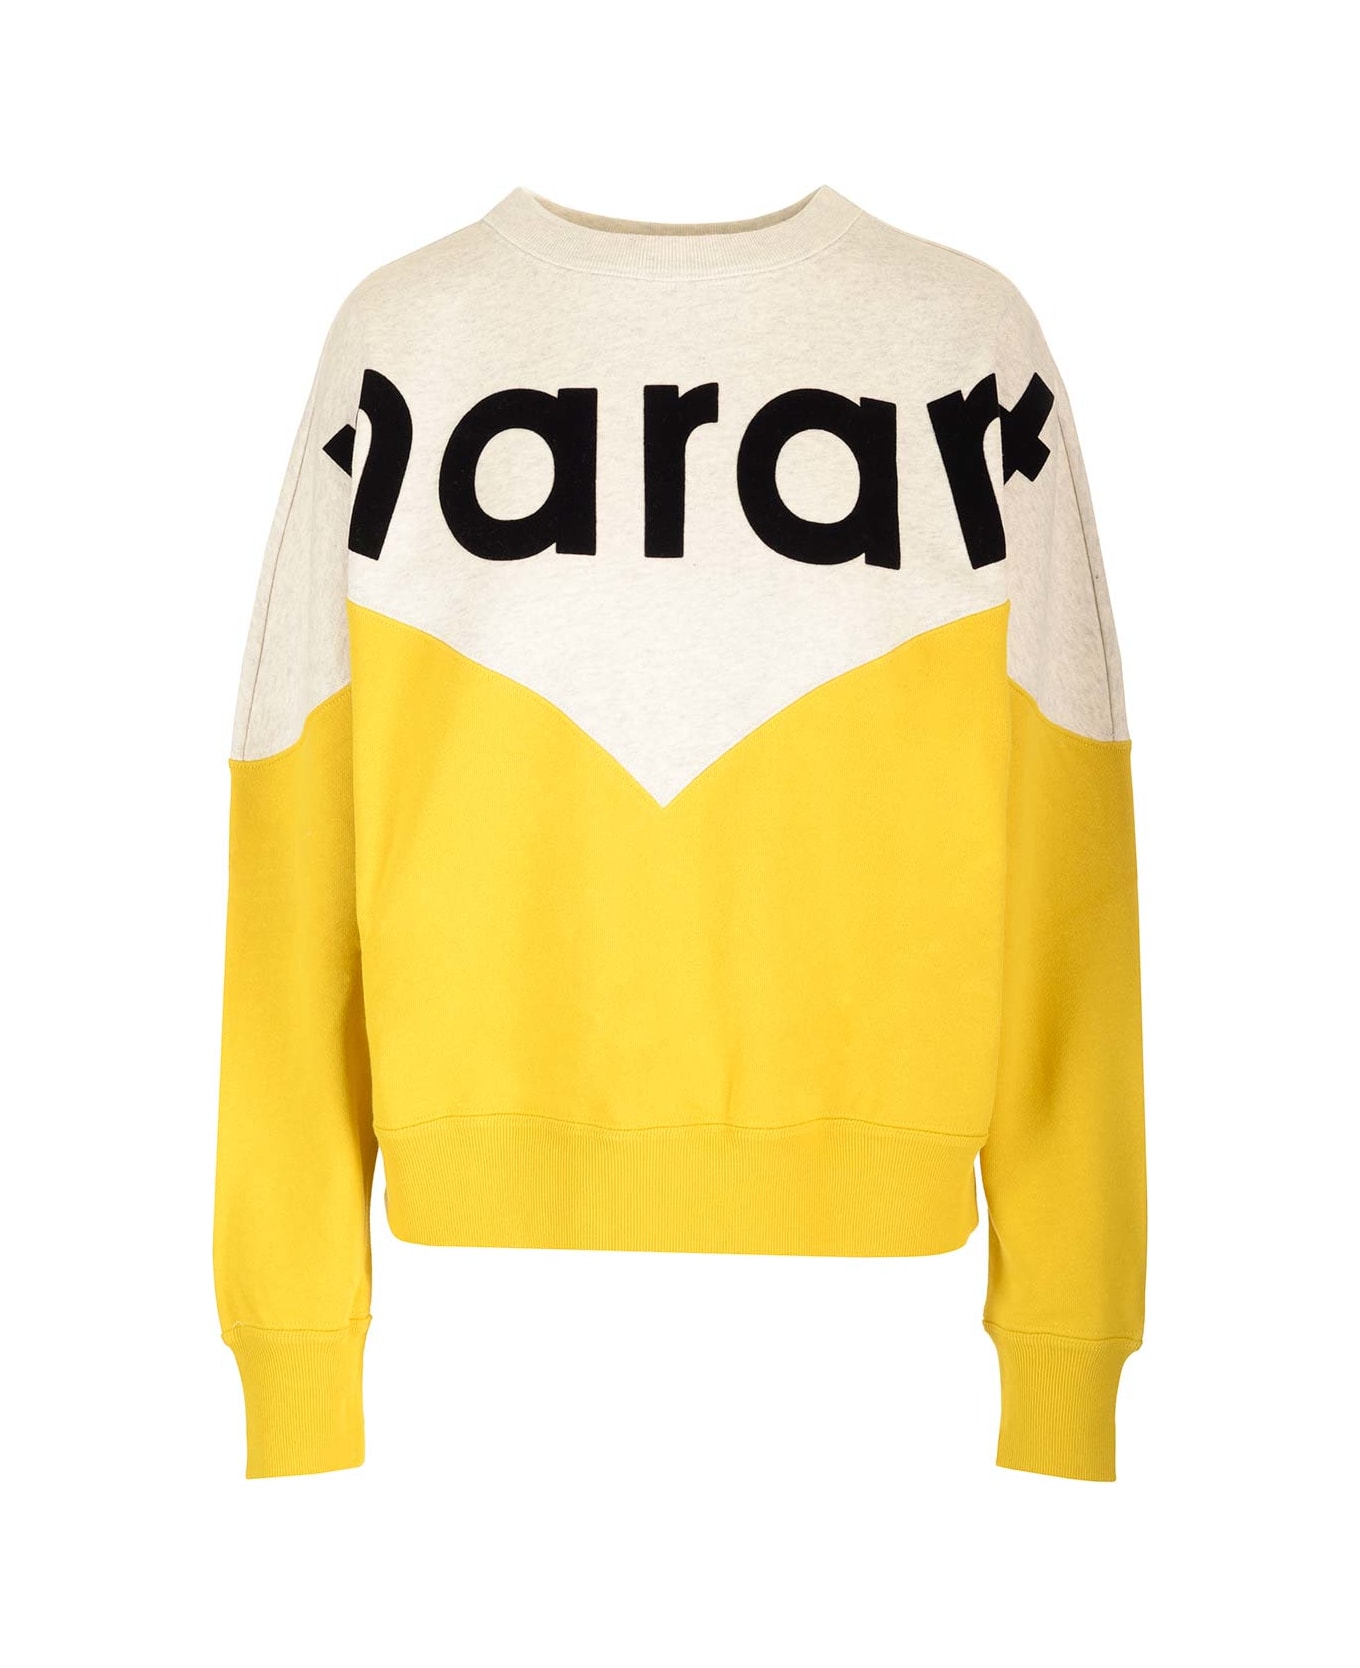 Marant Étoile Houston Sweatshirt - Yellow